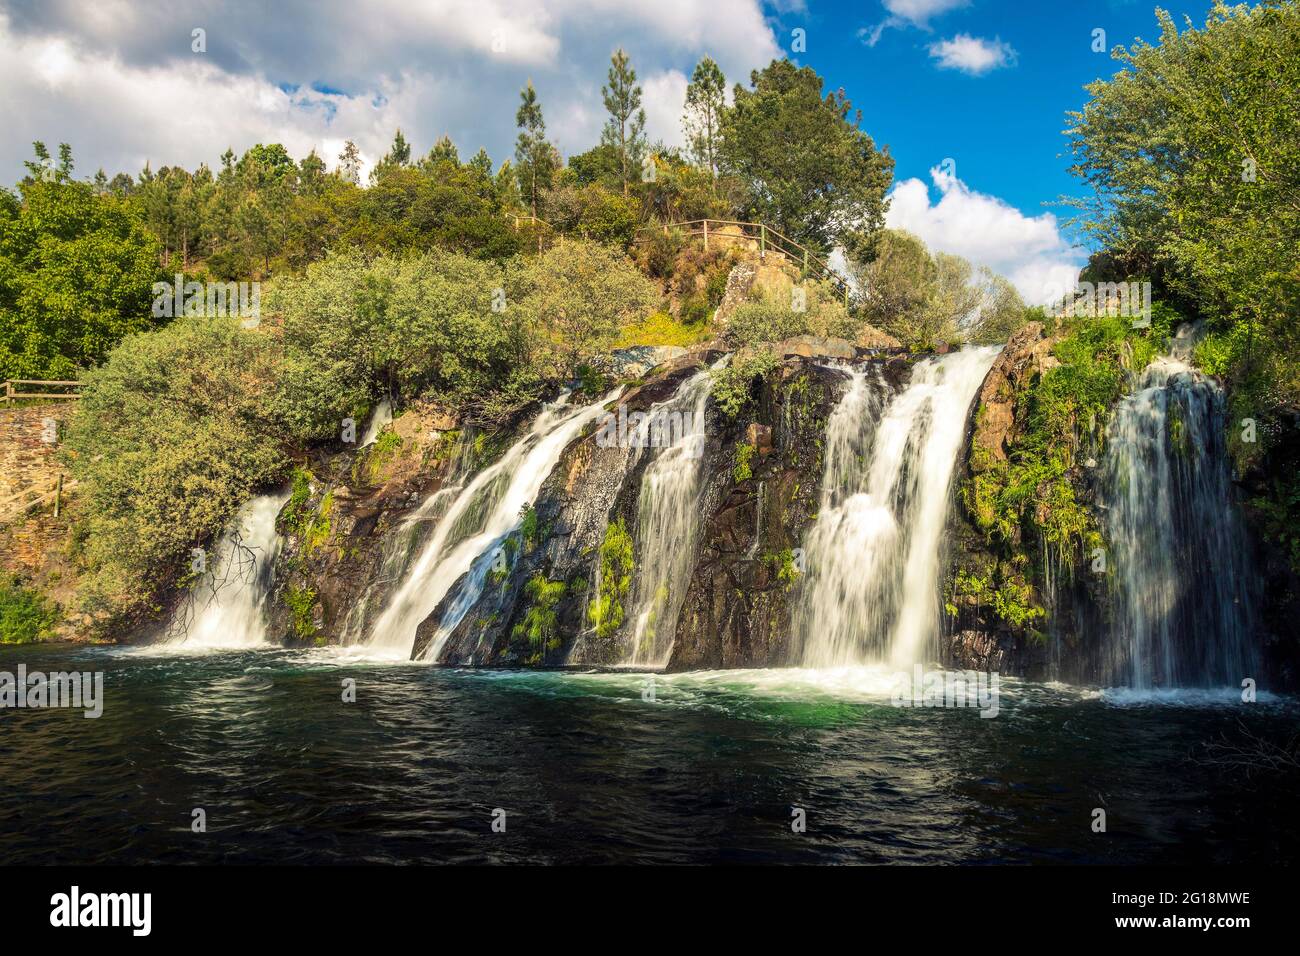 Spectacular waterfall of Poço da Broca in Barriosa, municipality of Seia in Portugal, in the Serra da Estrela Natural Park. Stock Photo